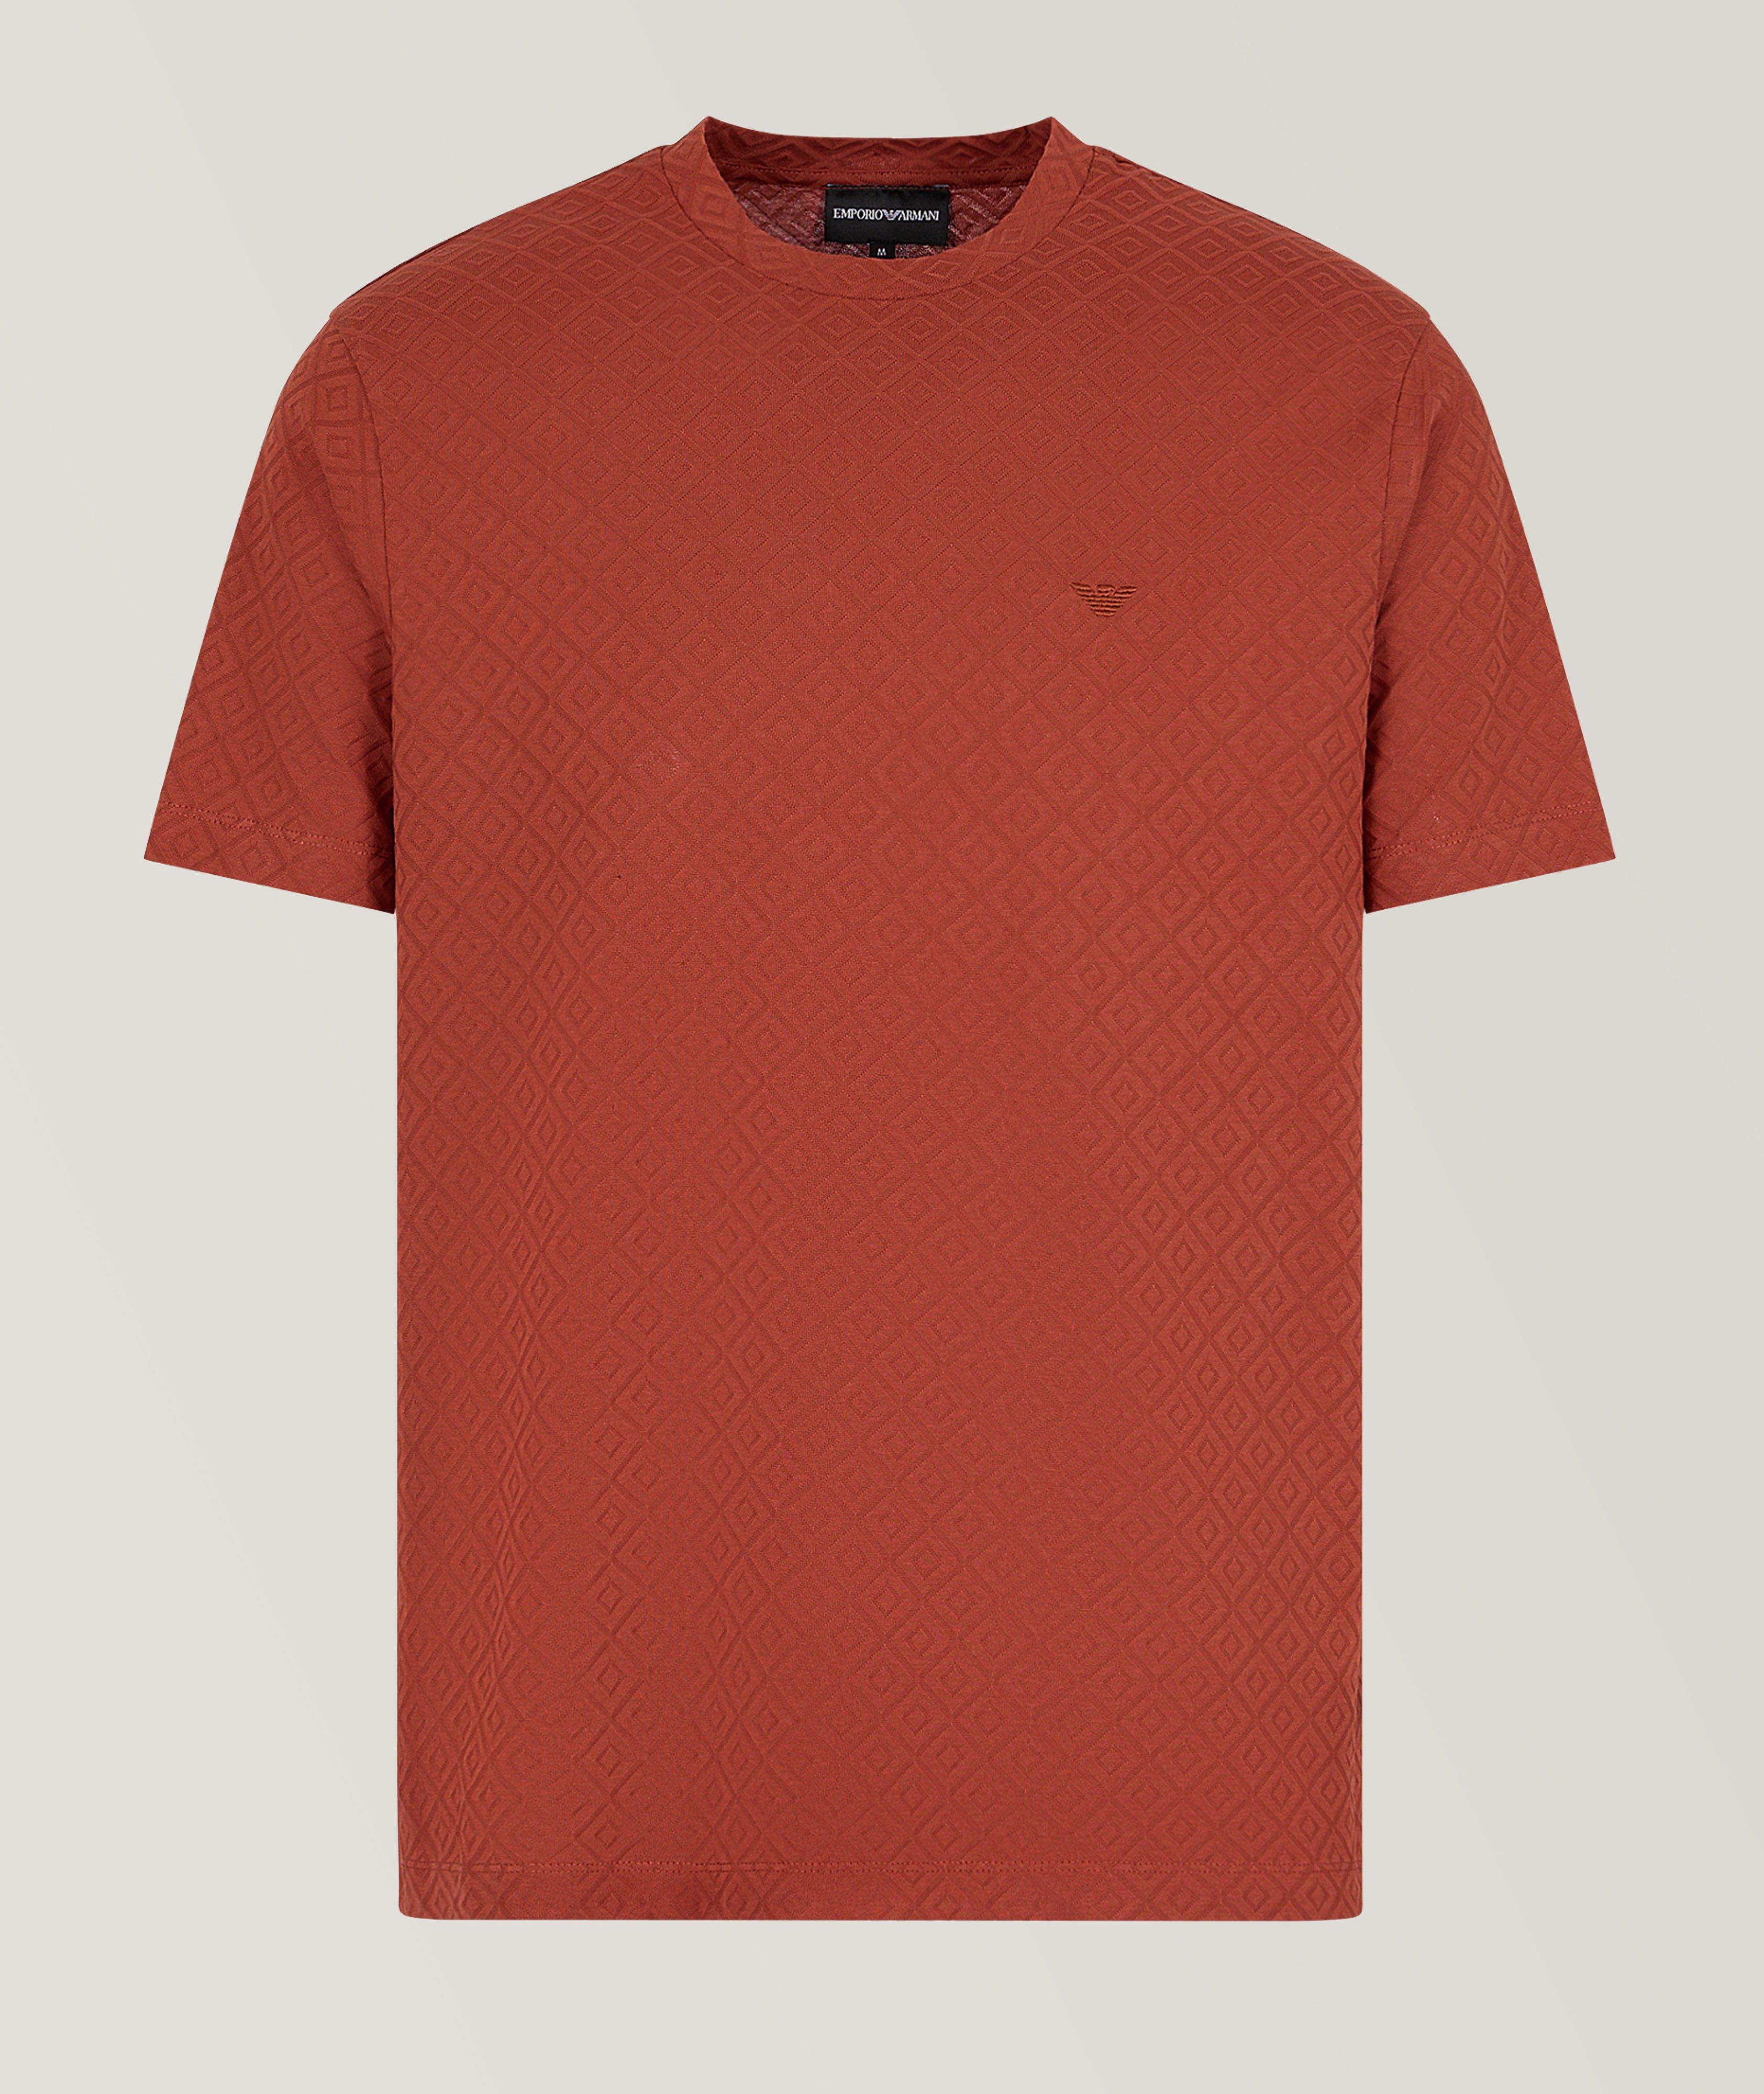 Jacquard Jersey Cotton T-Shirt image 0